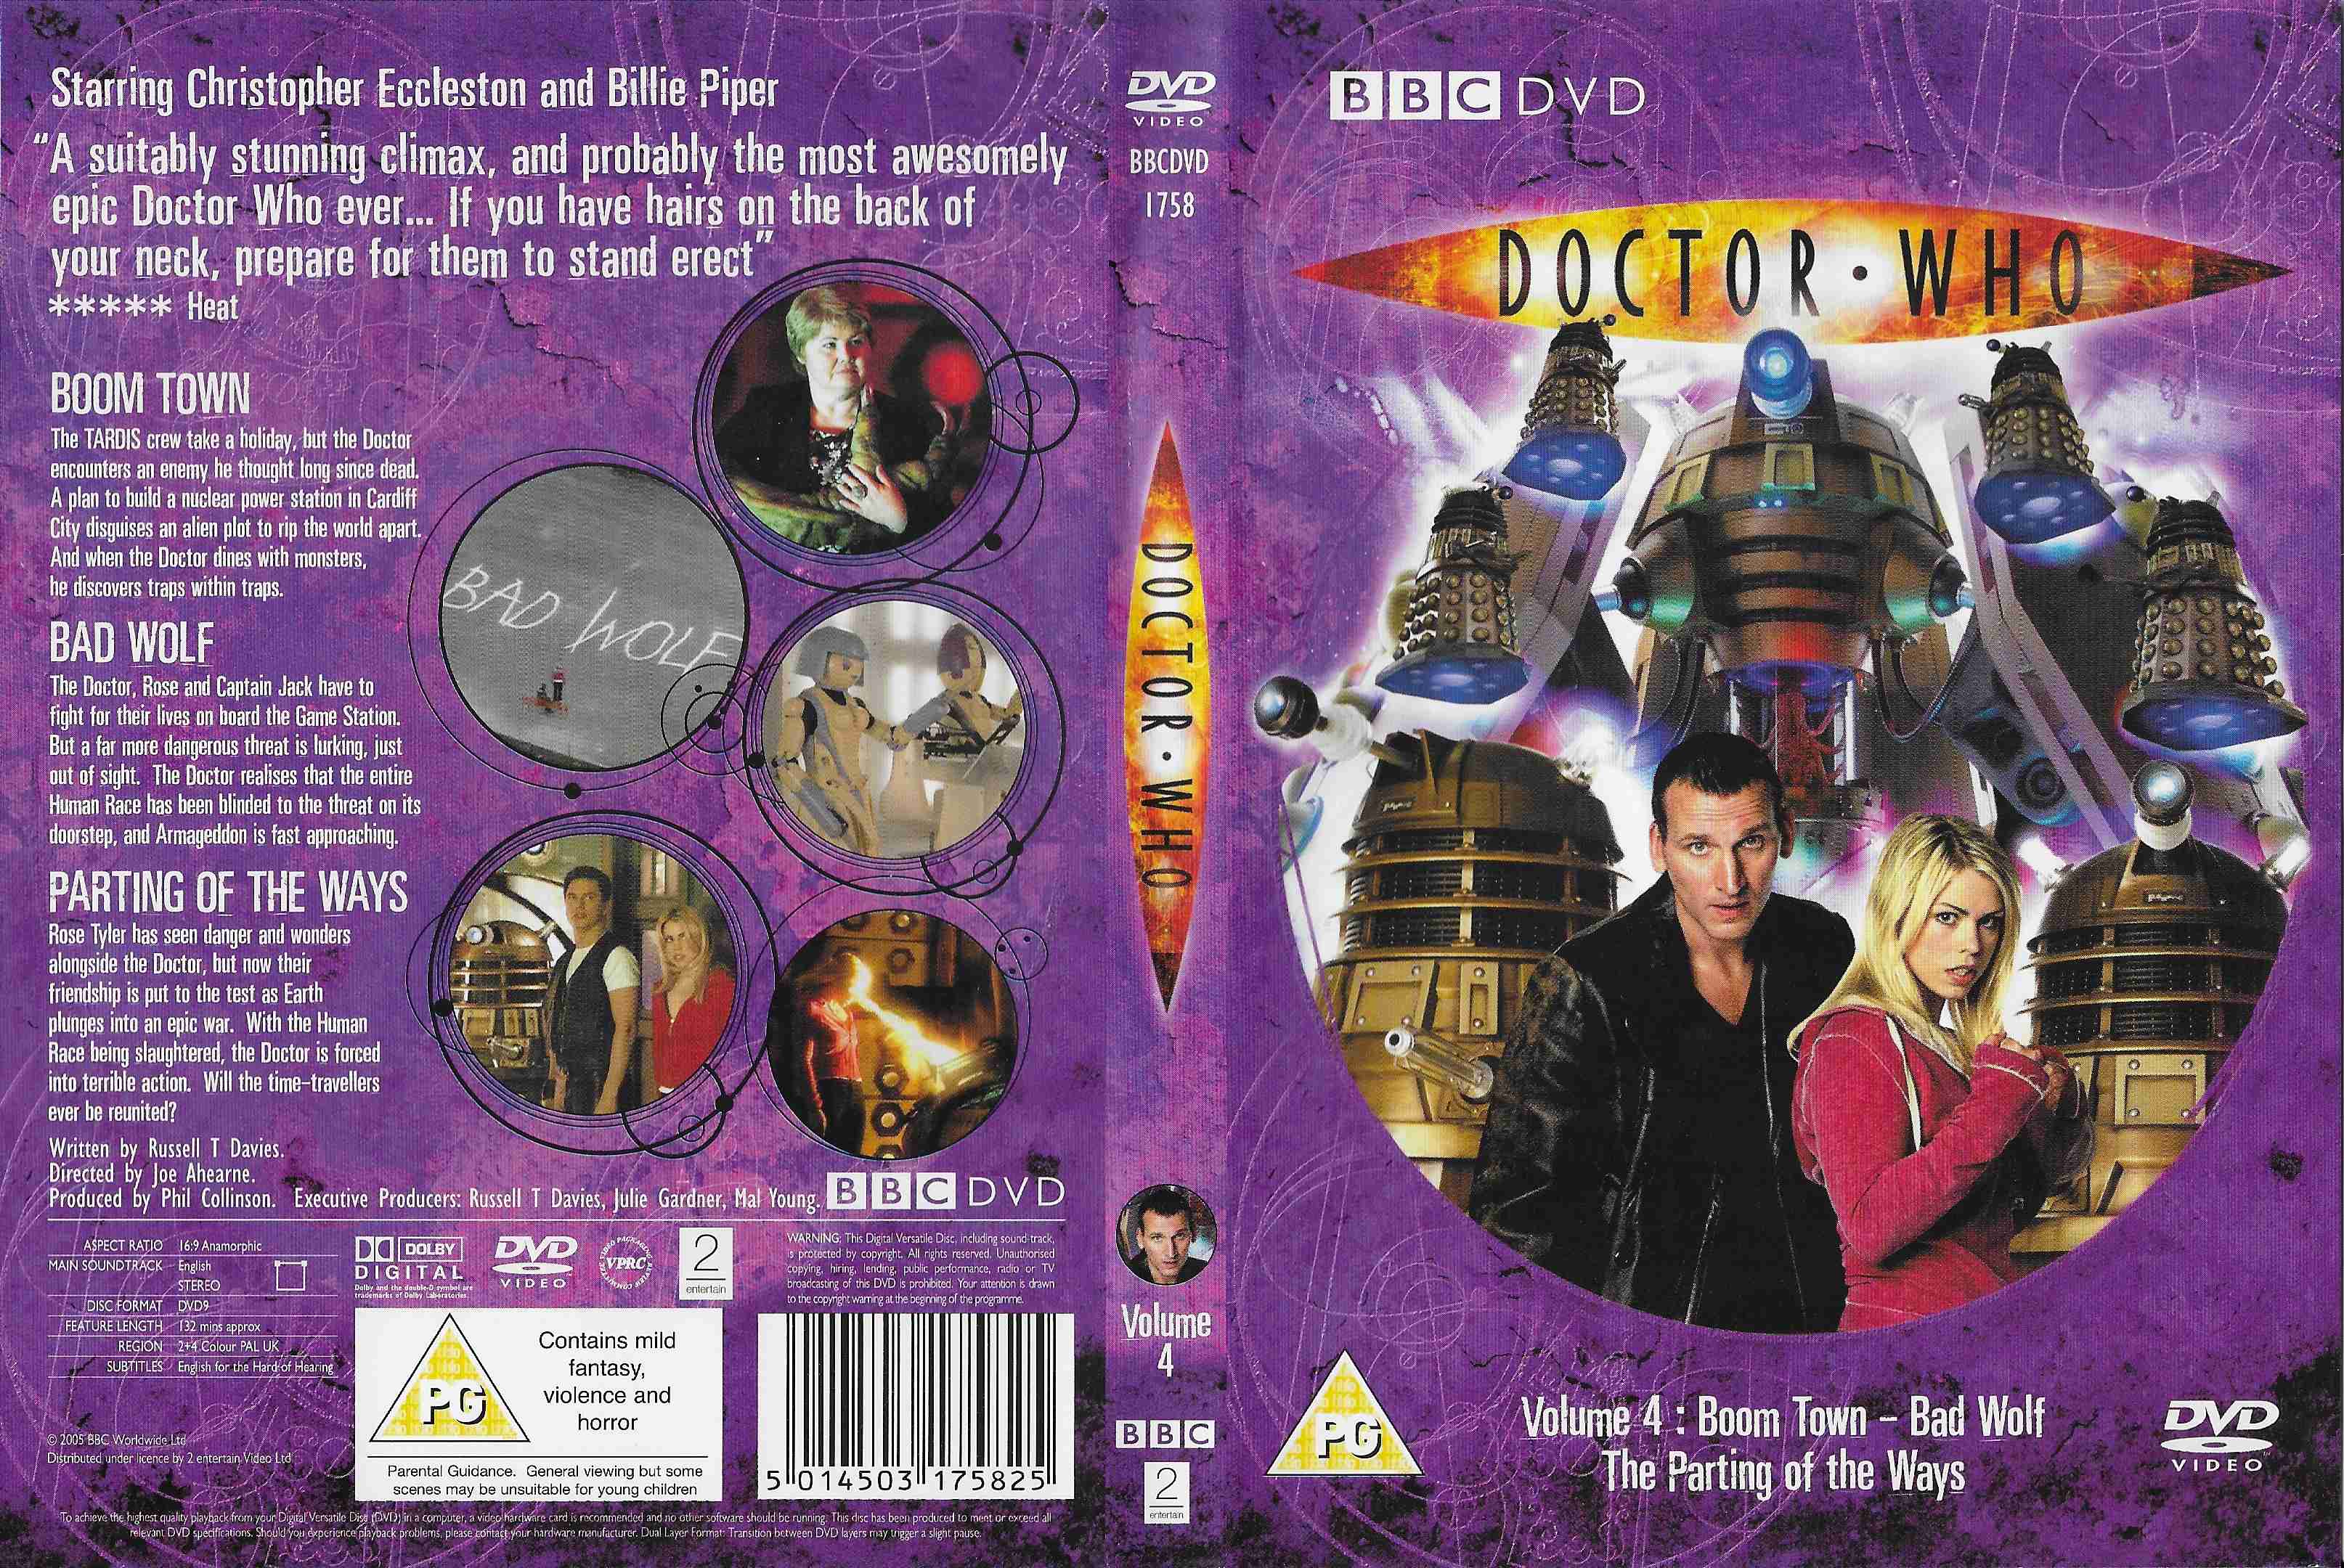 Back cover of BBCDVD 1758